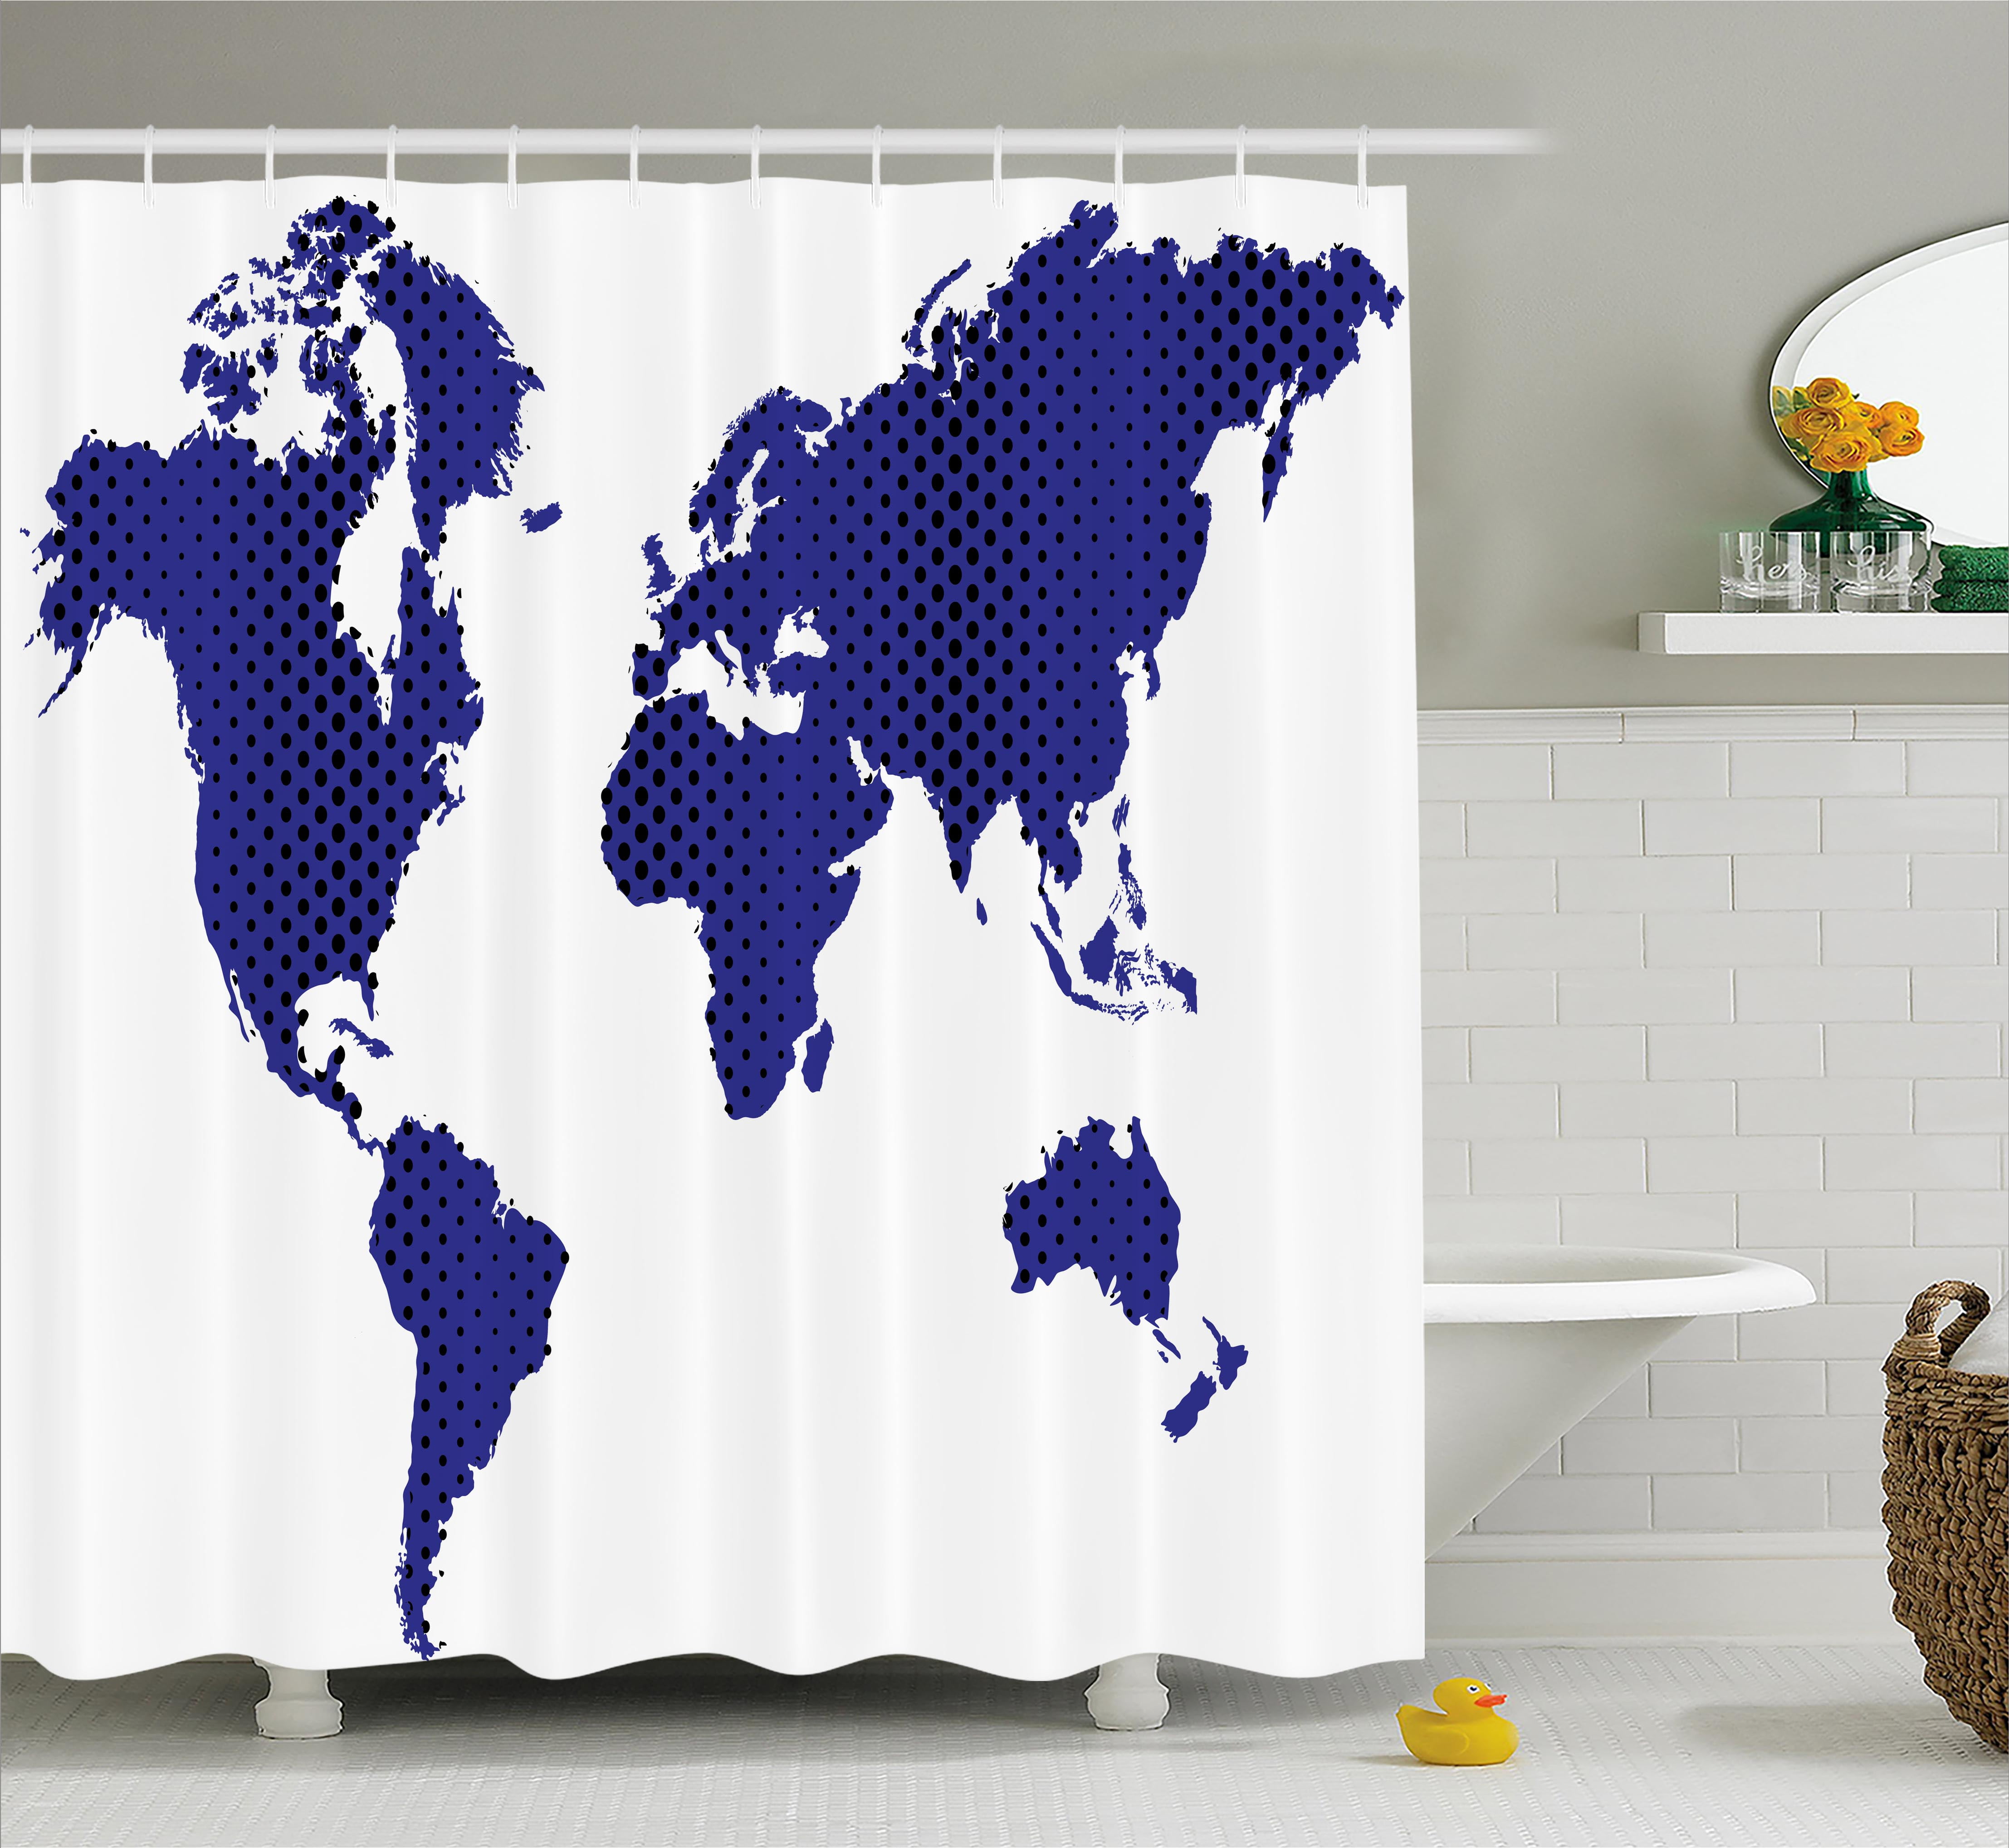 Navy Blue Shower Curtain Fabric Bathroom Decor Set with Hooks 4 Sizes Available